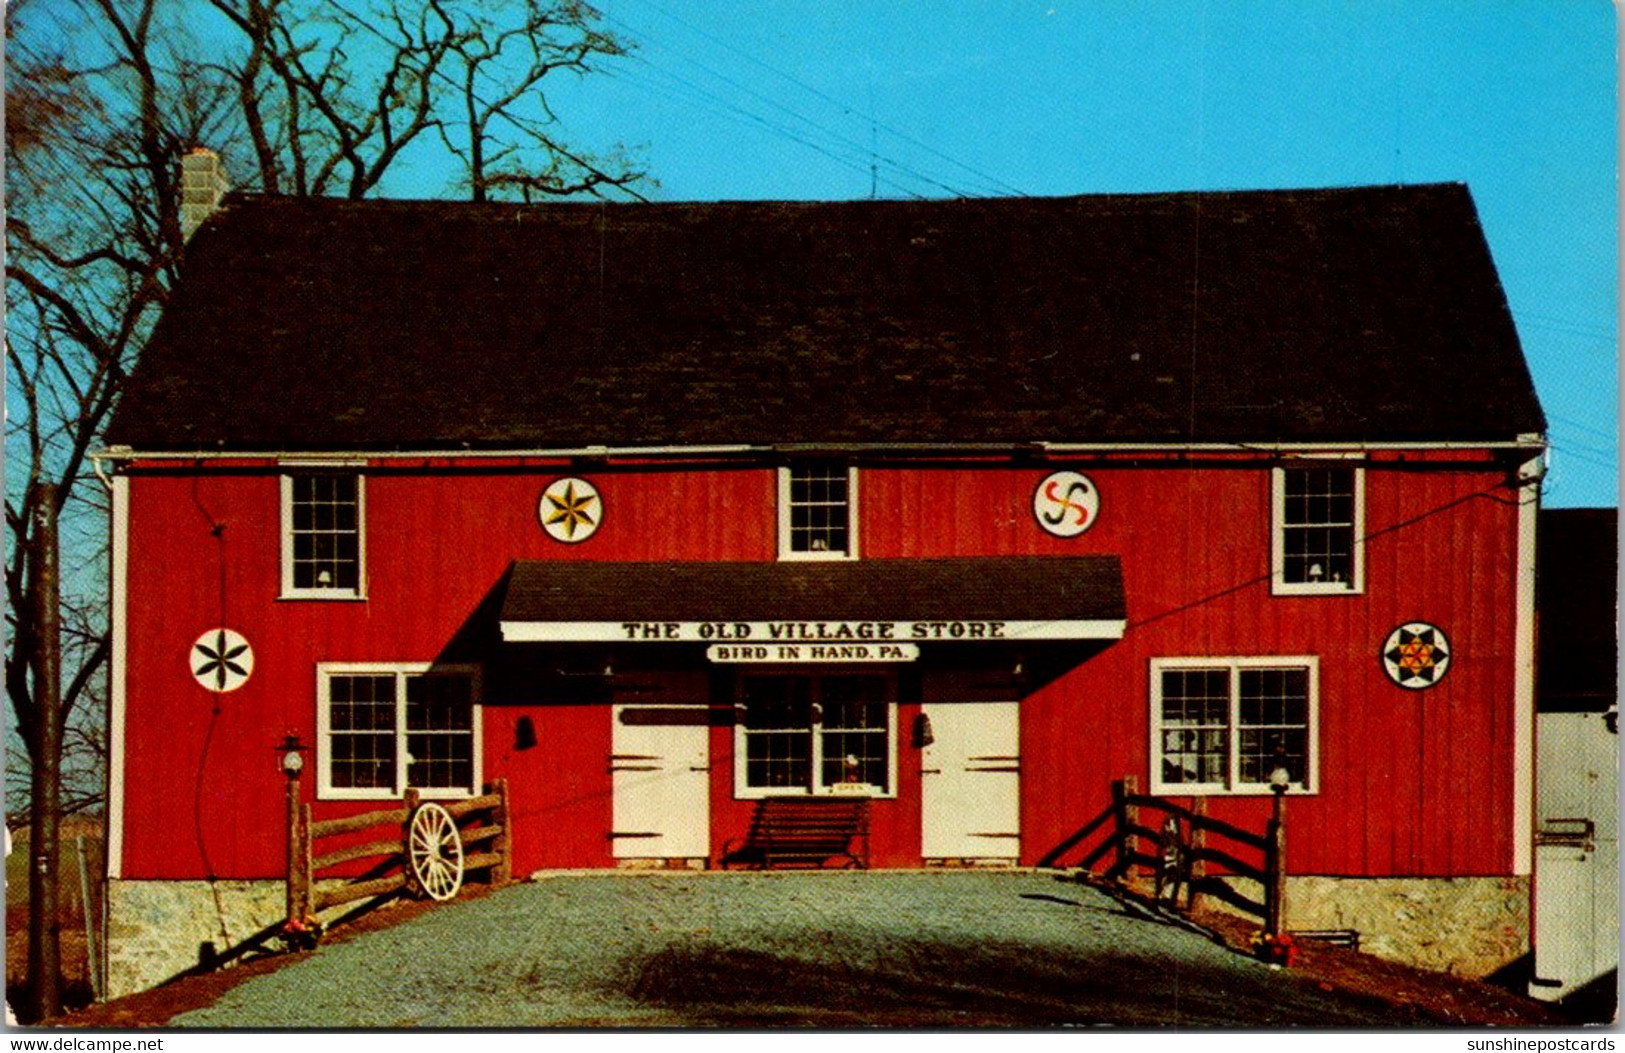 Pennsylvania Bird-In-Hand The Old Village Store - Lancaster